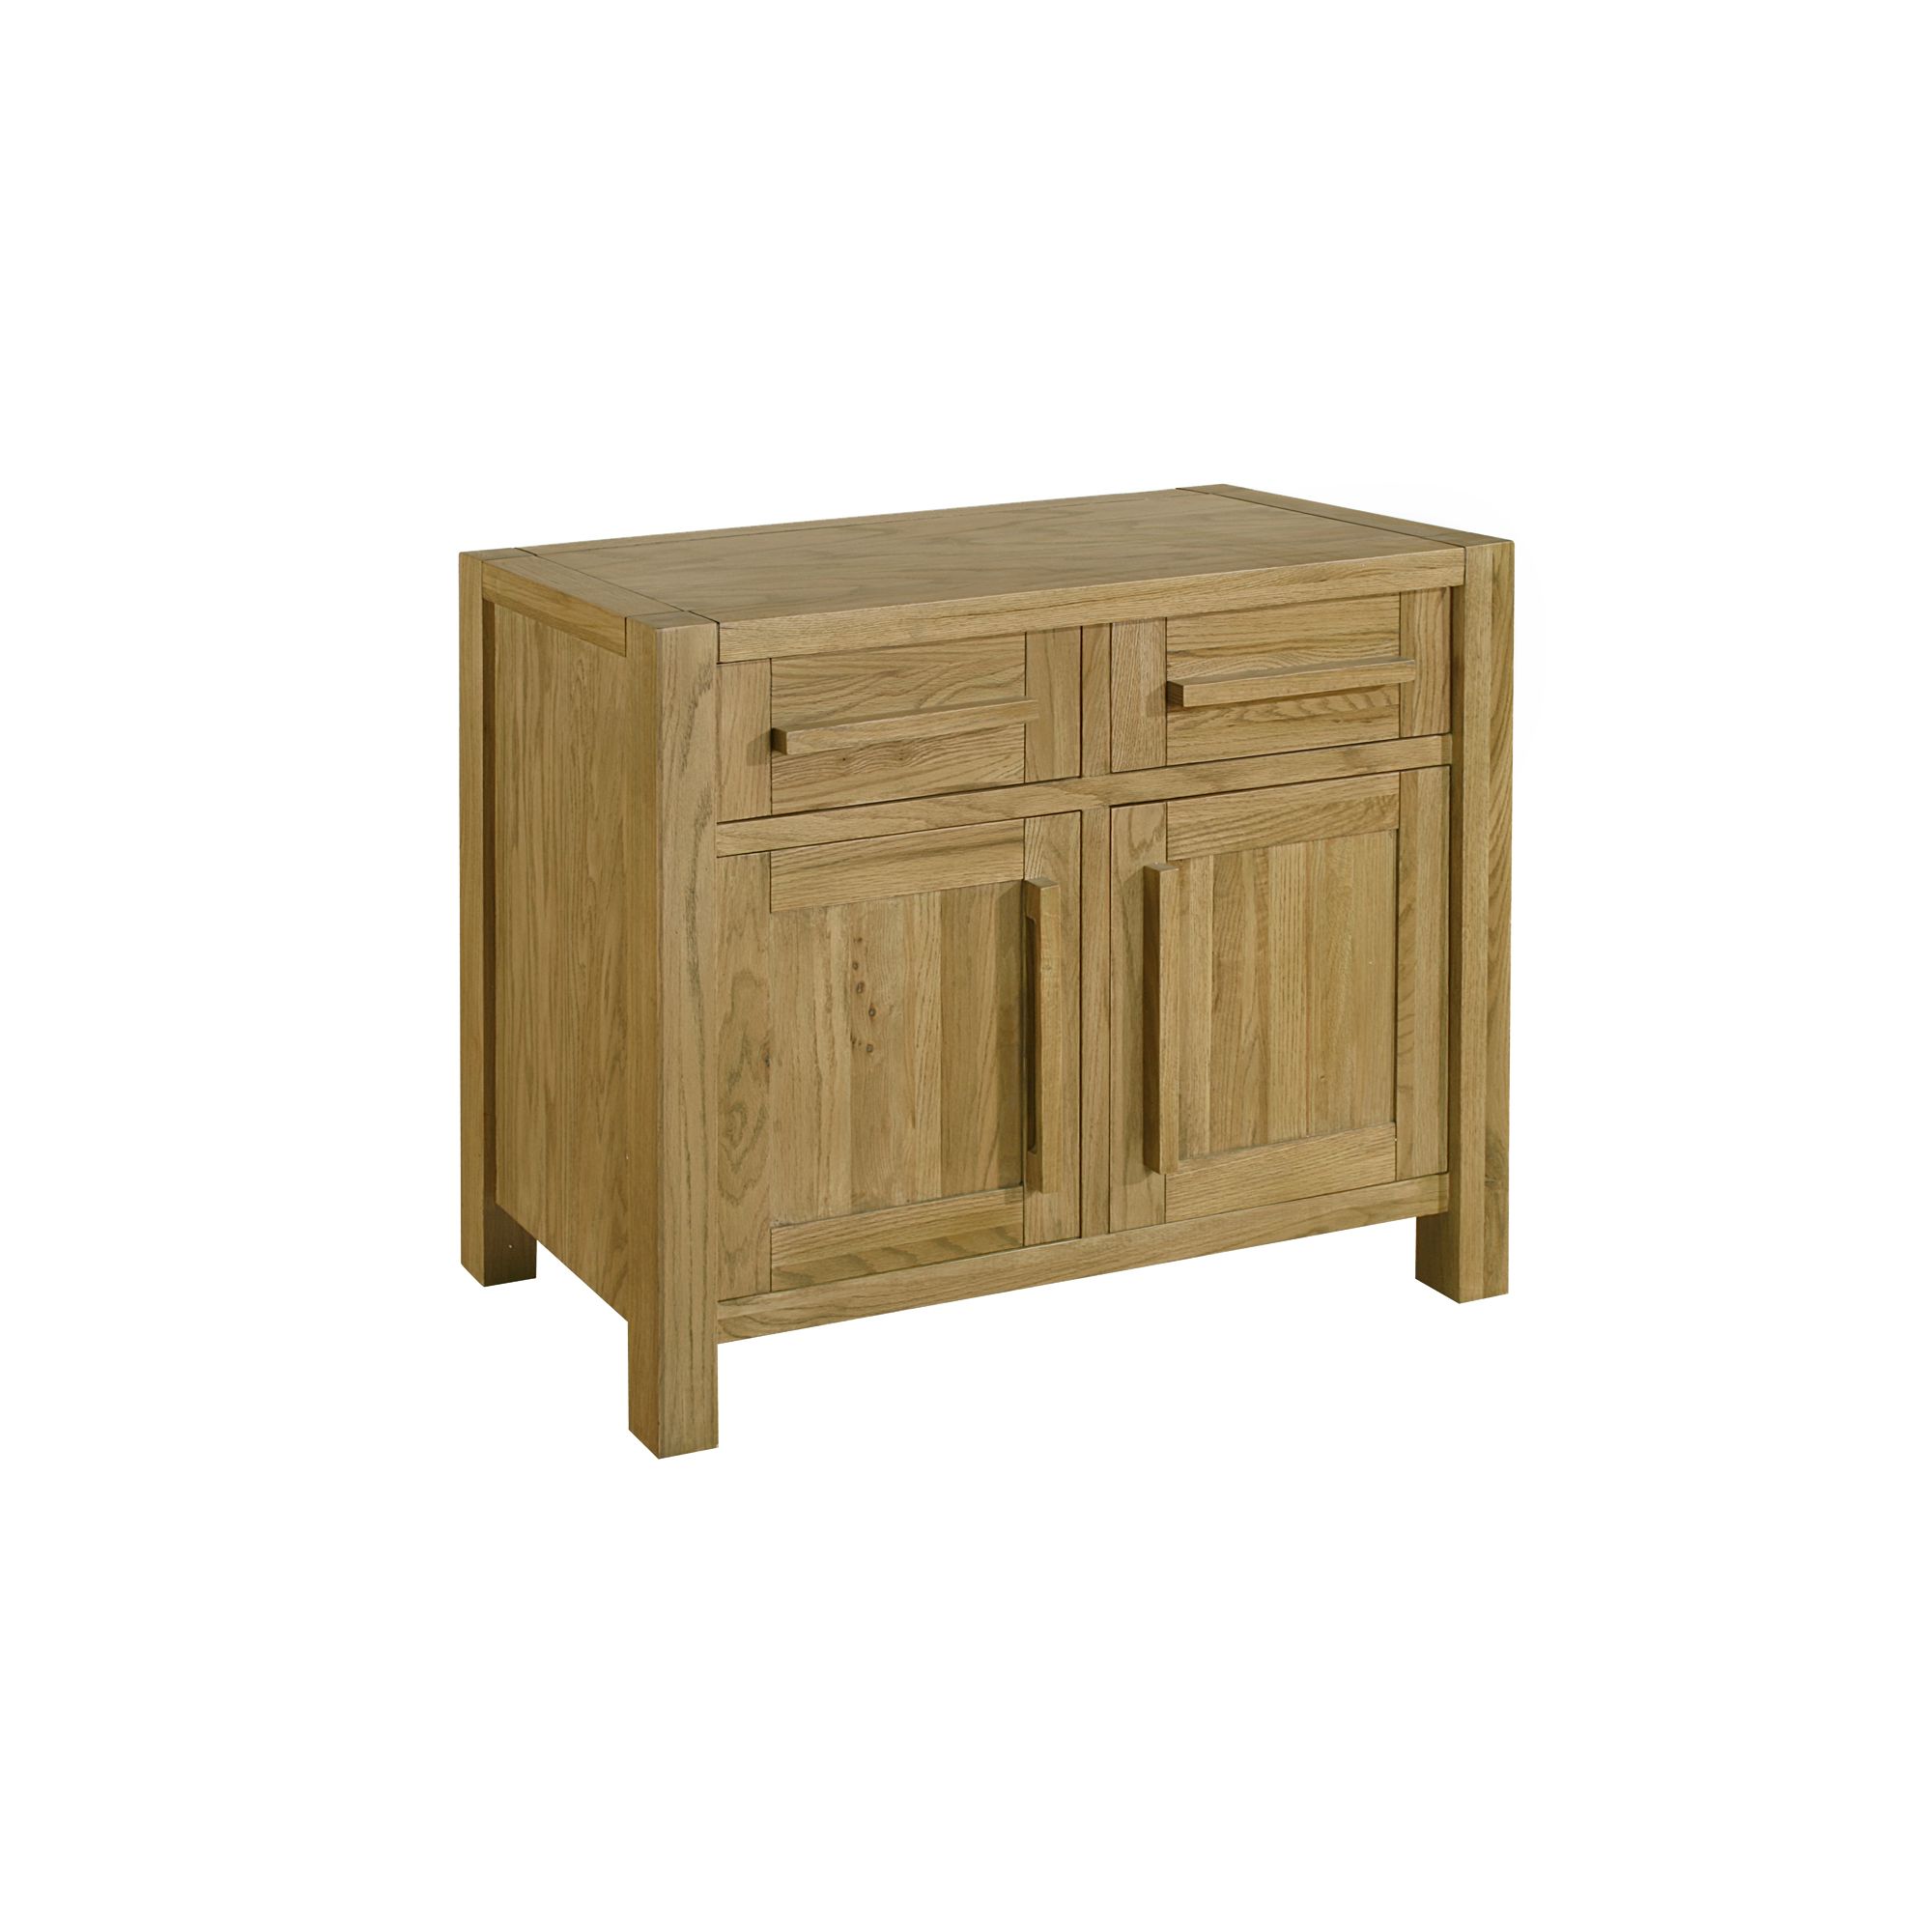 Alterton Furniture Jersey Oak Small Sideboard at Tesco Direct